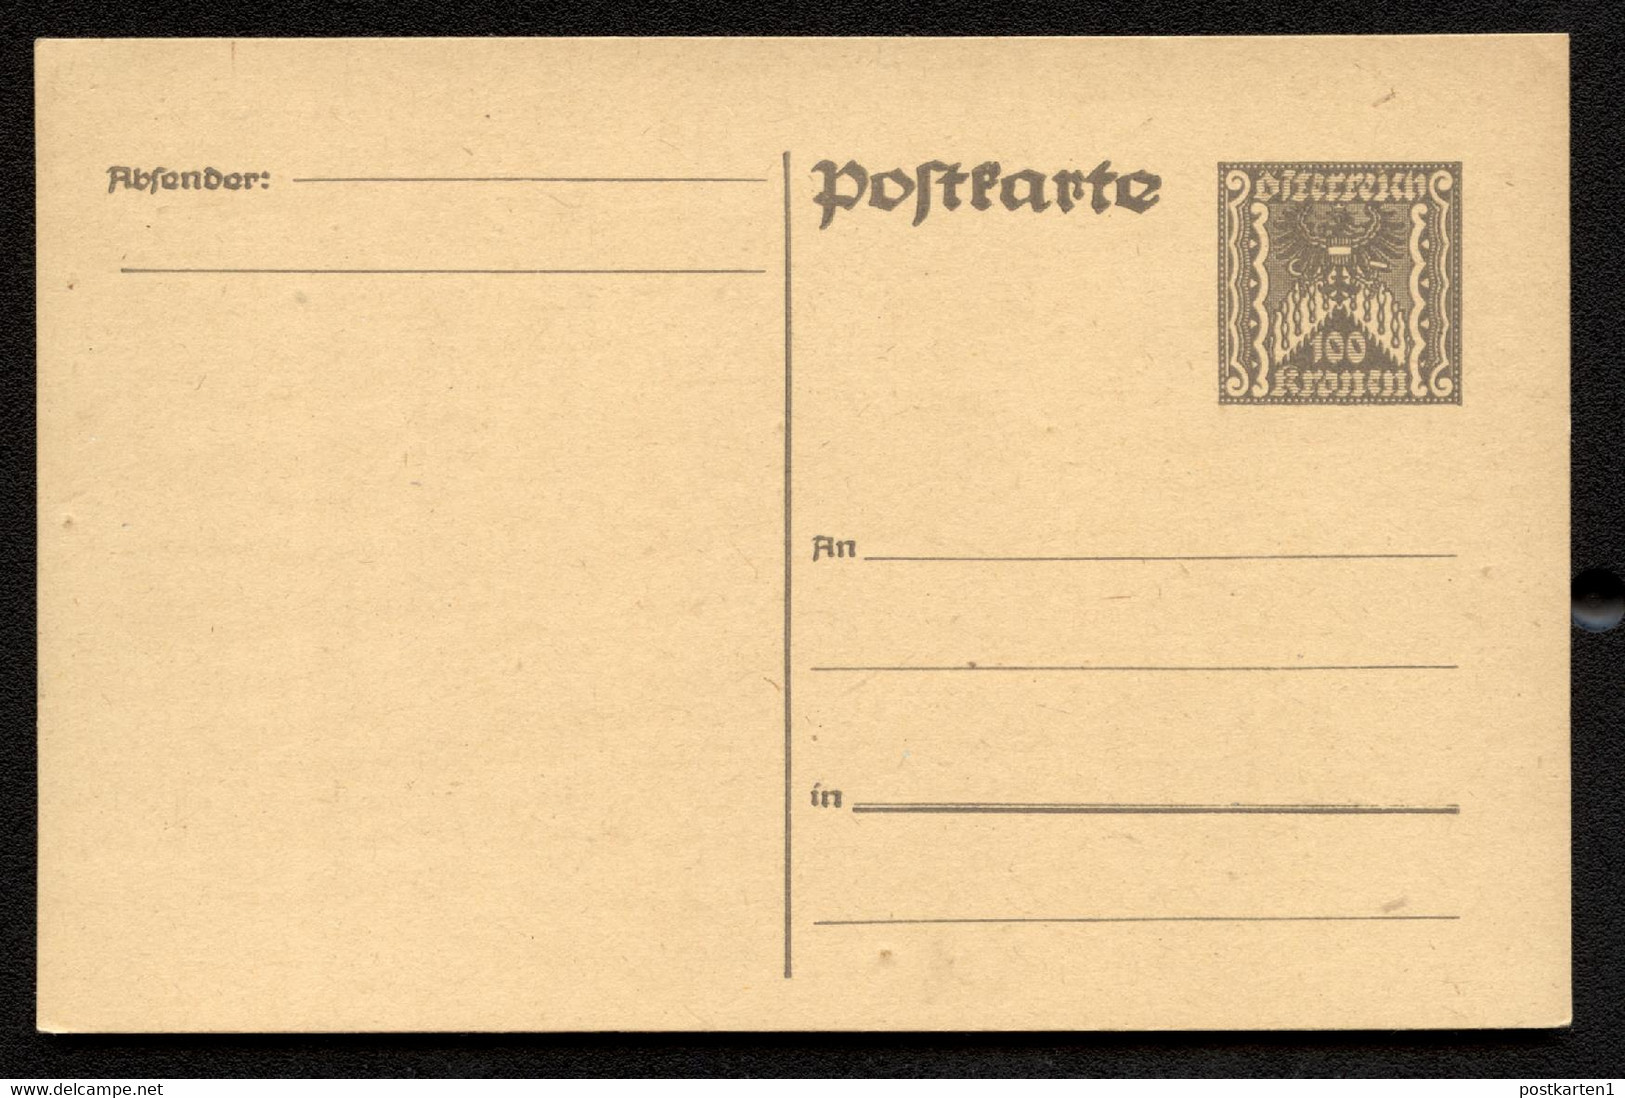 Postkarte P257 Postfrisch Feinst 1922 Kat.20,00 € - Postkarten